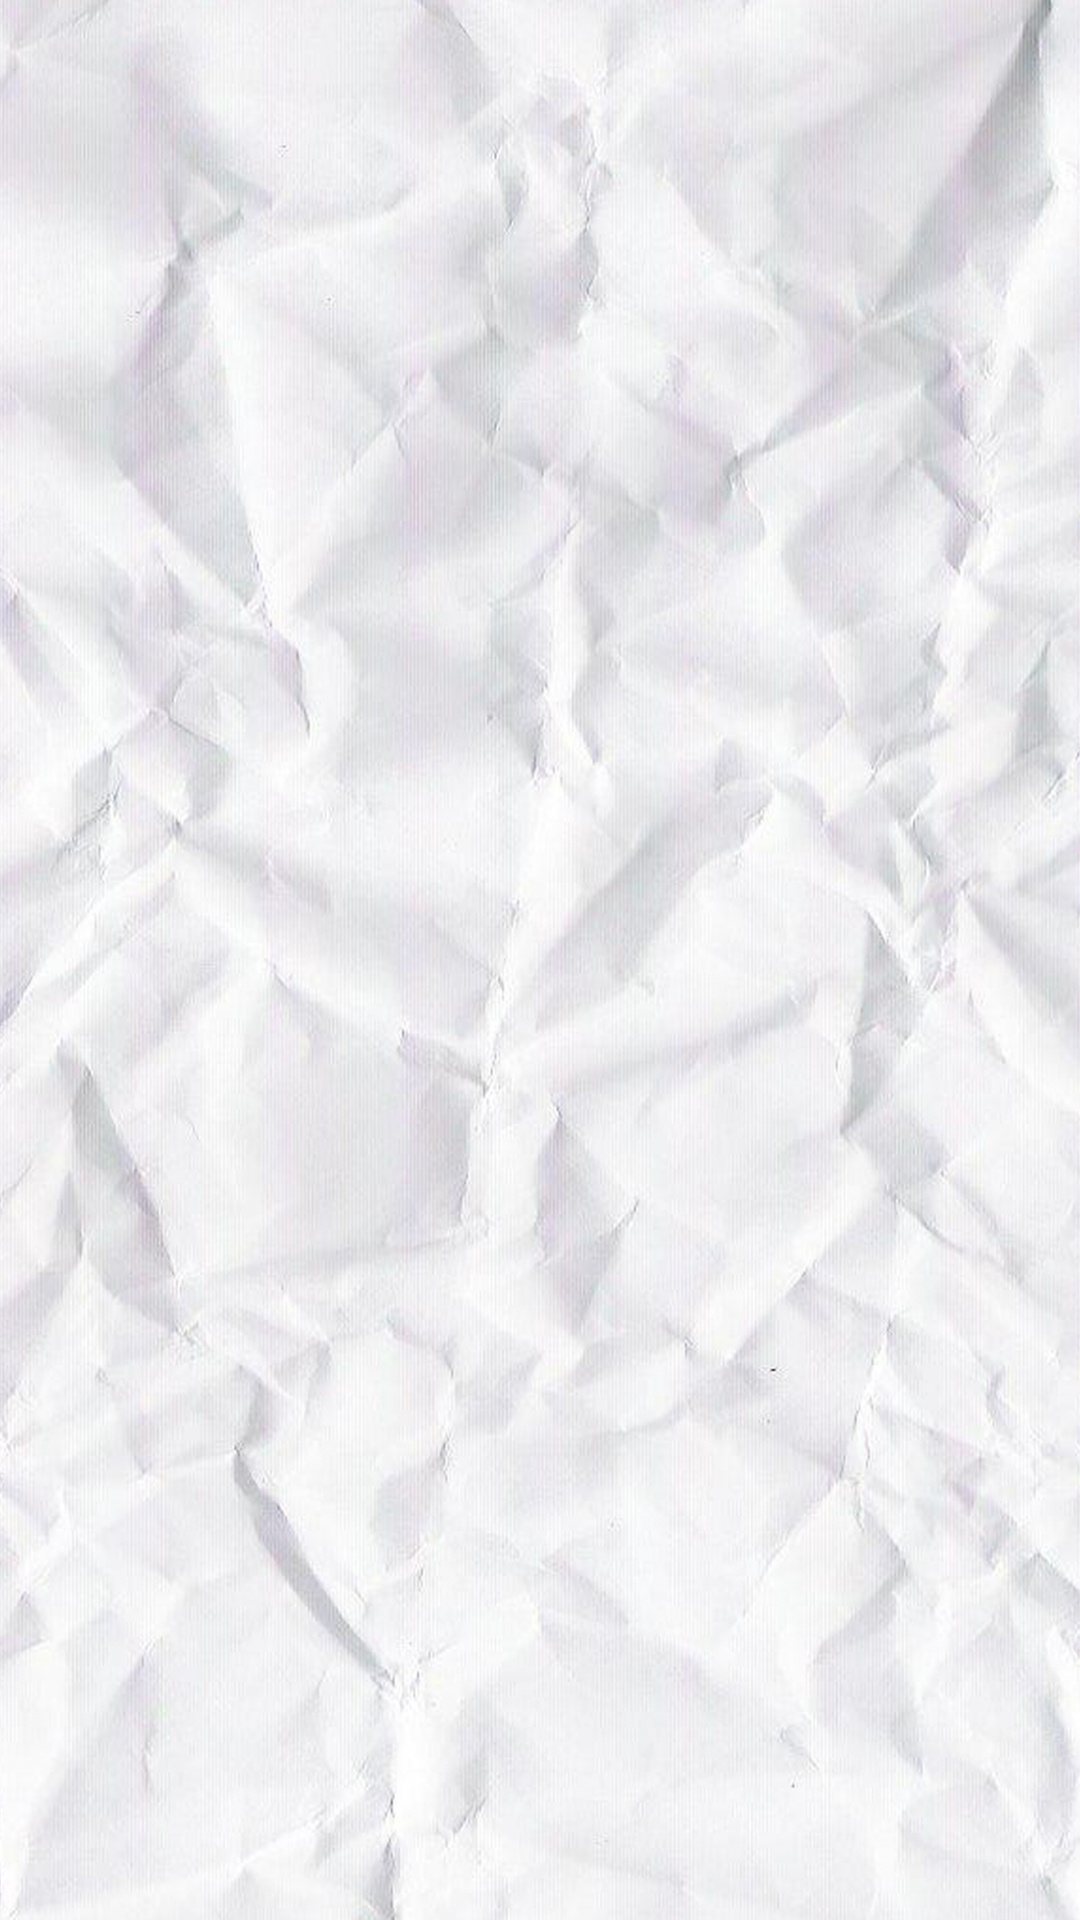 Textil Floral Blanco y Gris. Wallpaper in 1080x1920 Resolution